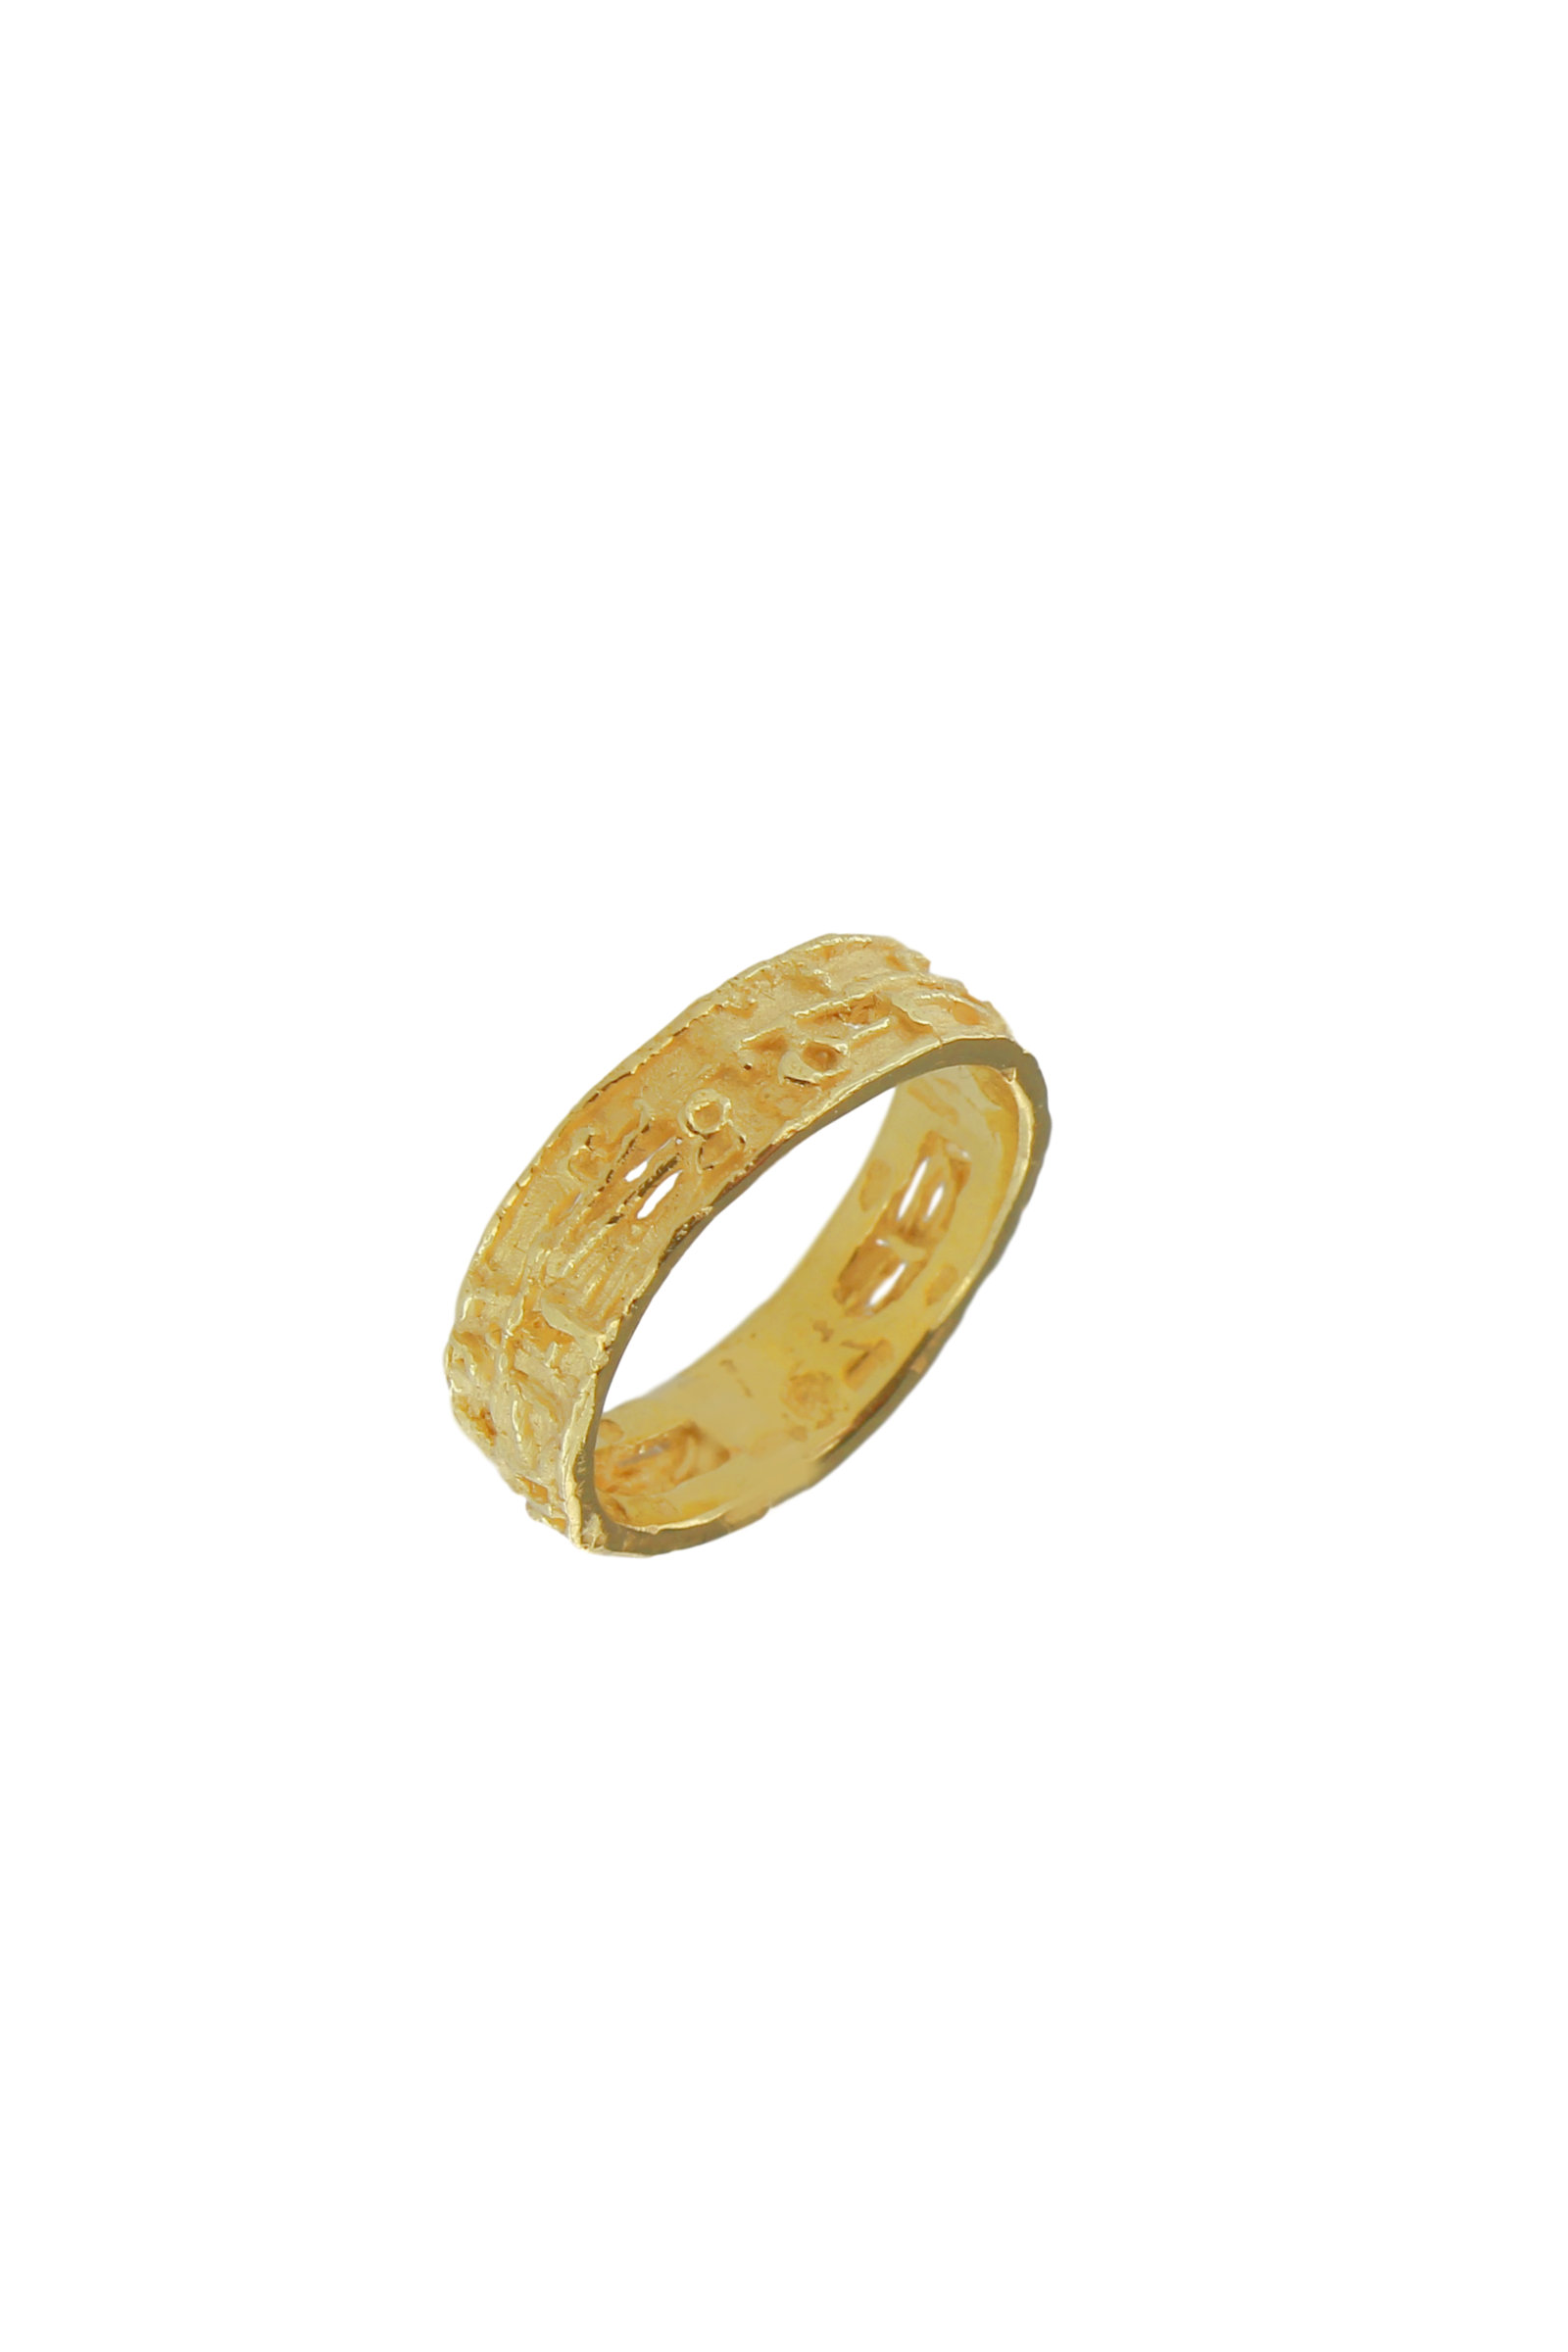 SE154B-18-Kt-Yellow-Gold-Band-Ring-1